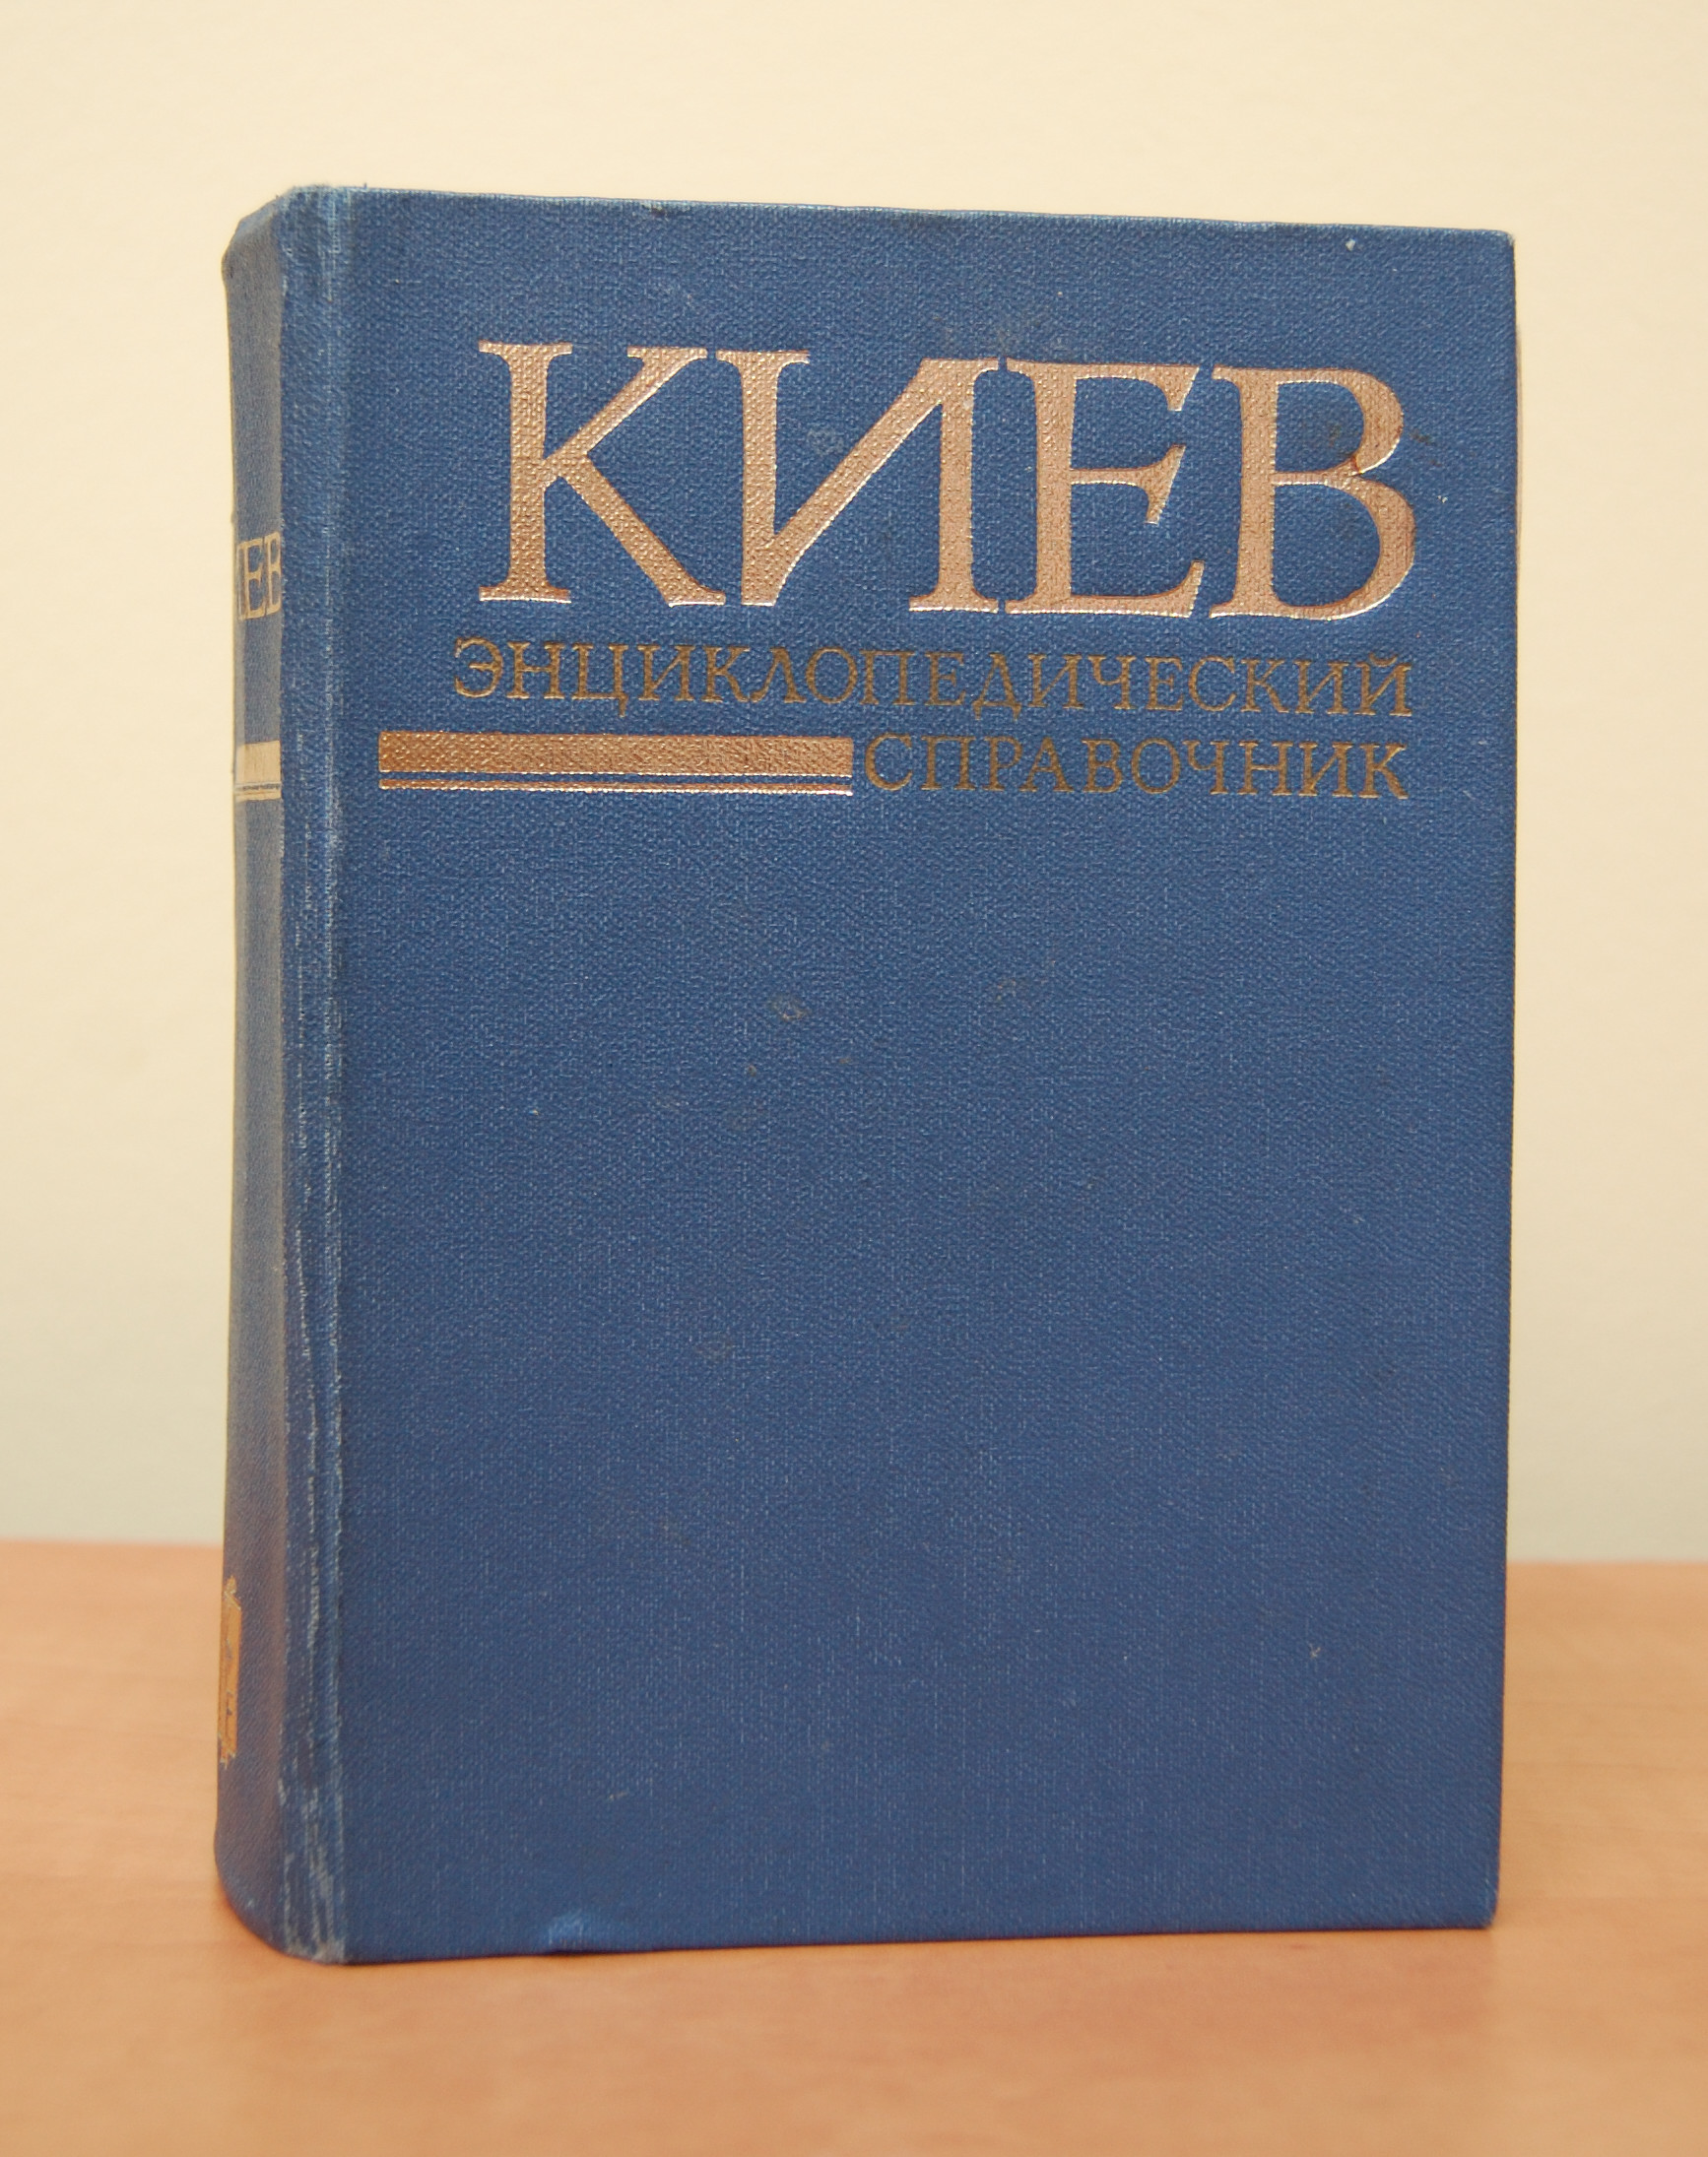 Encyclopedic Reference Kiev 1982 ru